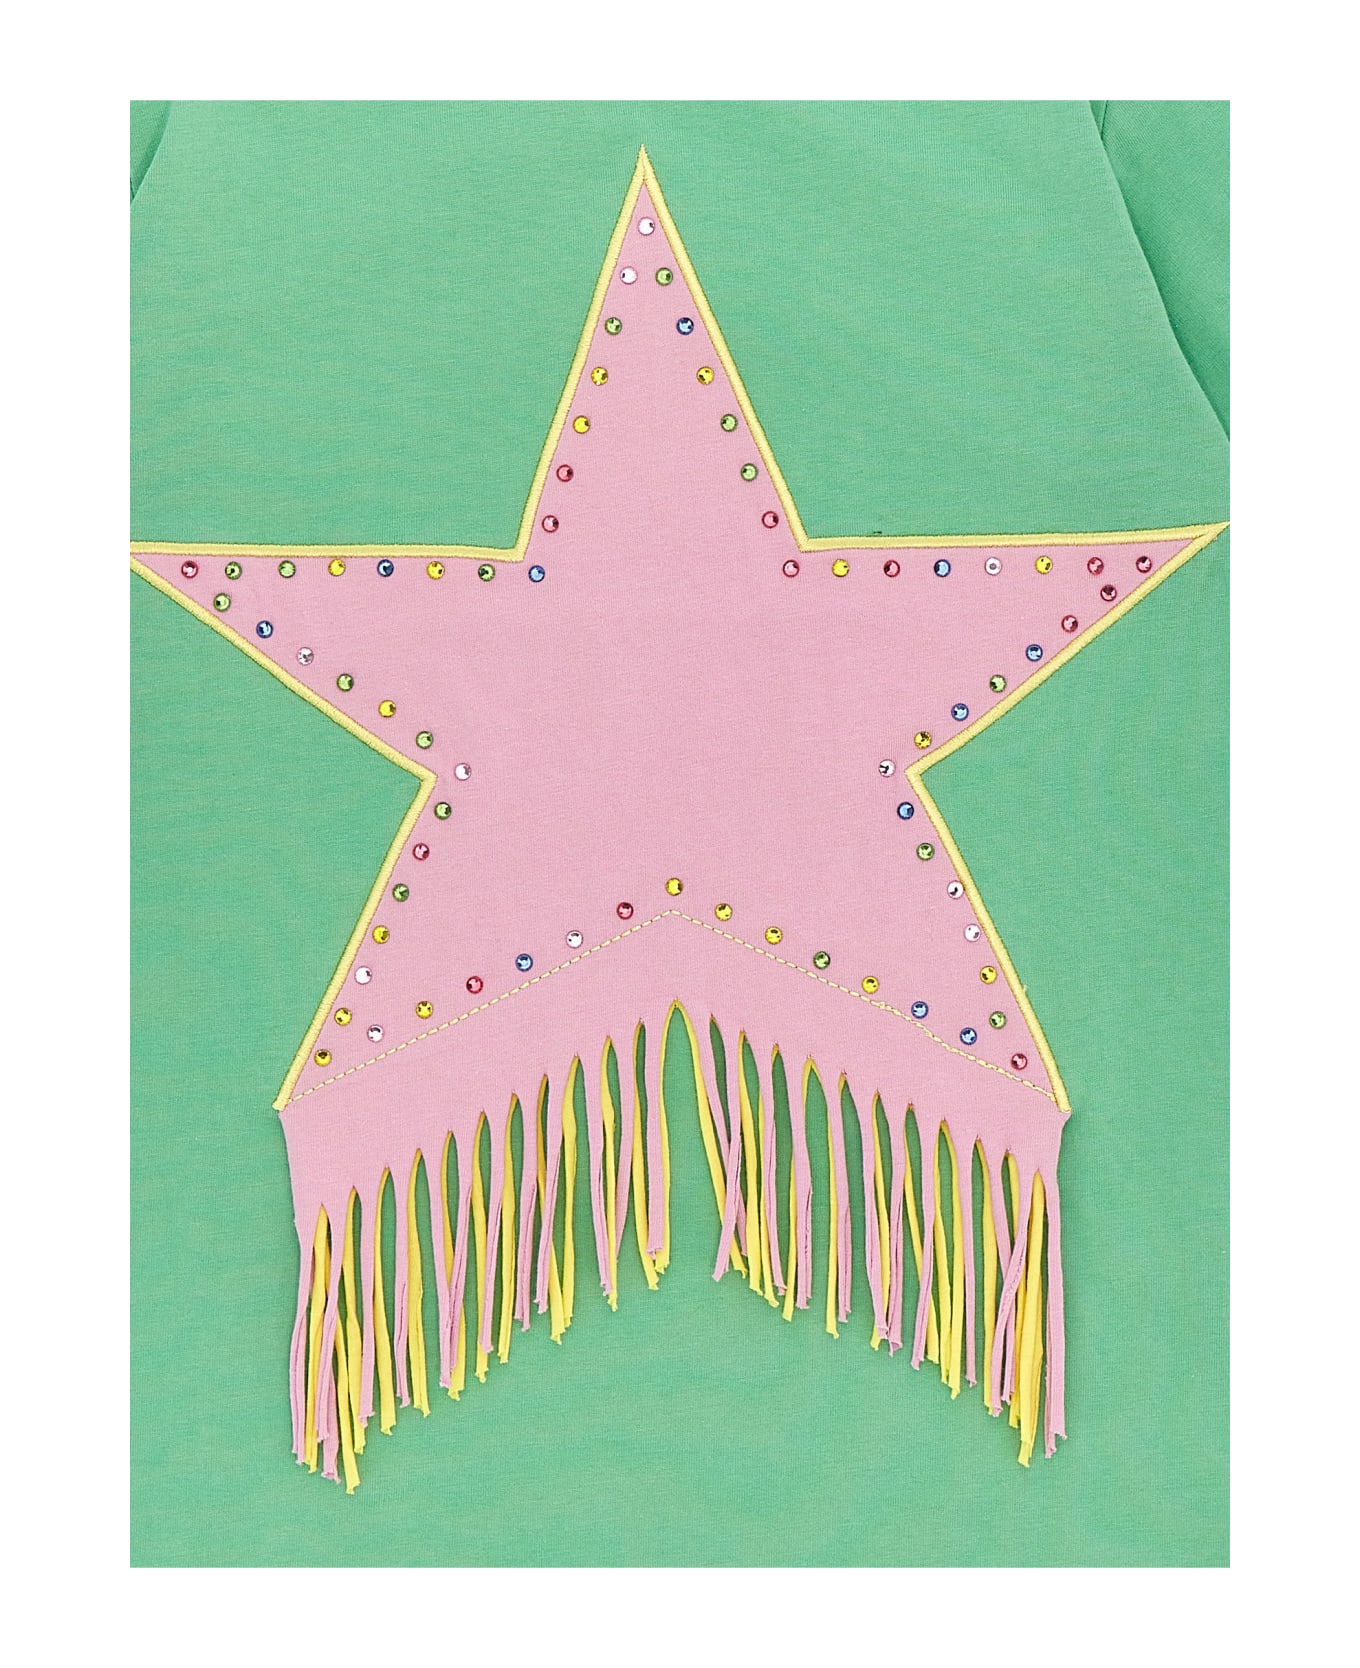 Stella McCartney Kids Star T-shirt - Verde acqua